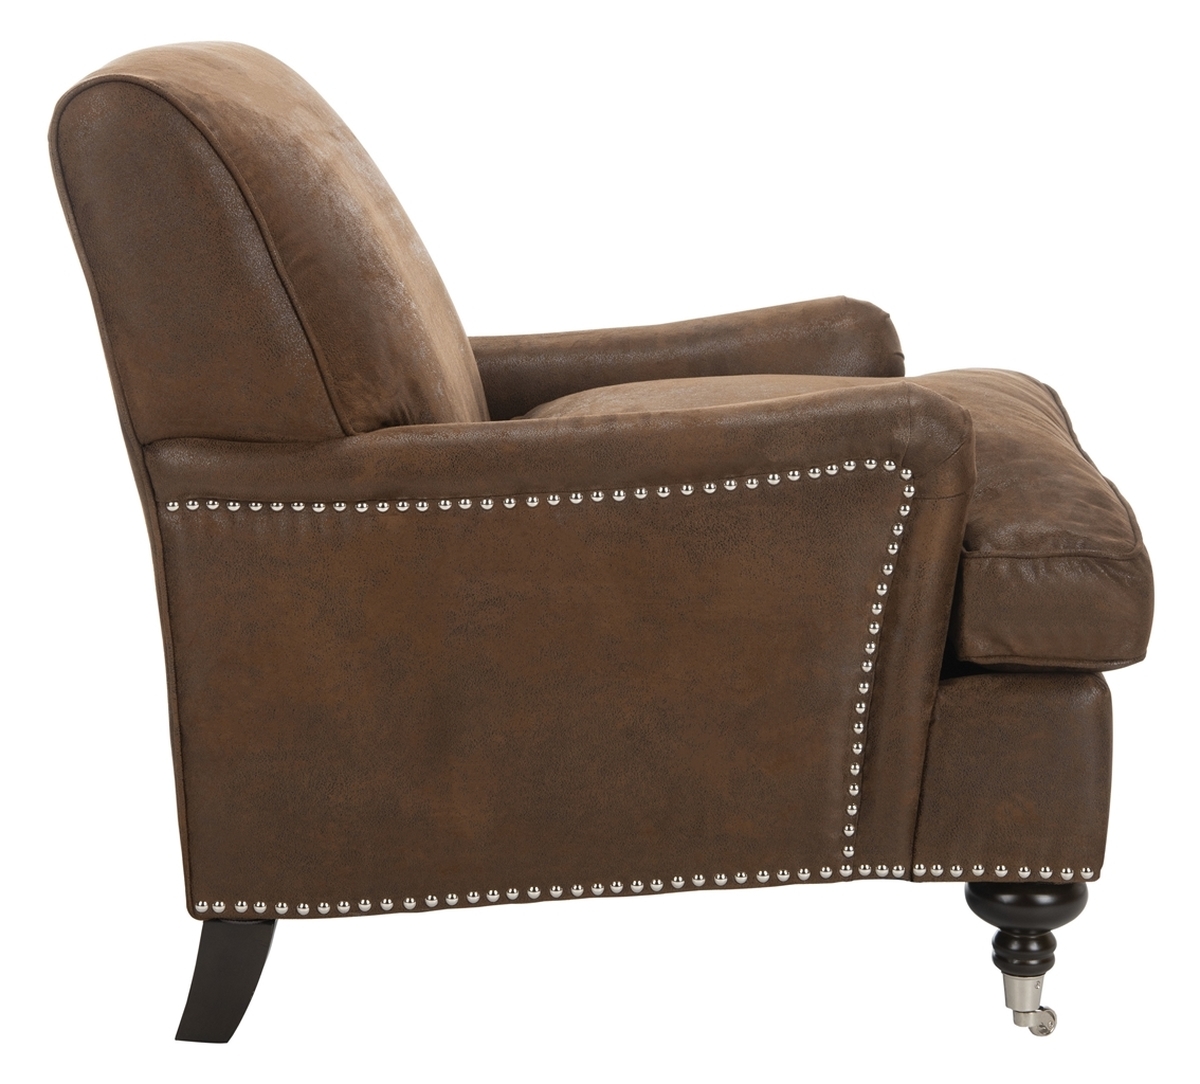 Chloe Club Chair - Brown/Espresso - Arlo Home - Image 2